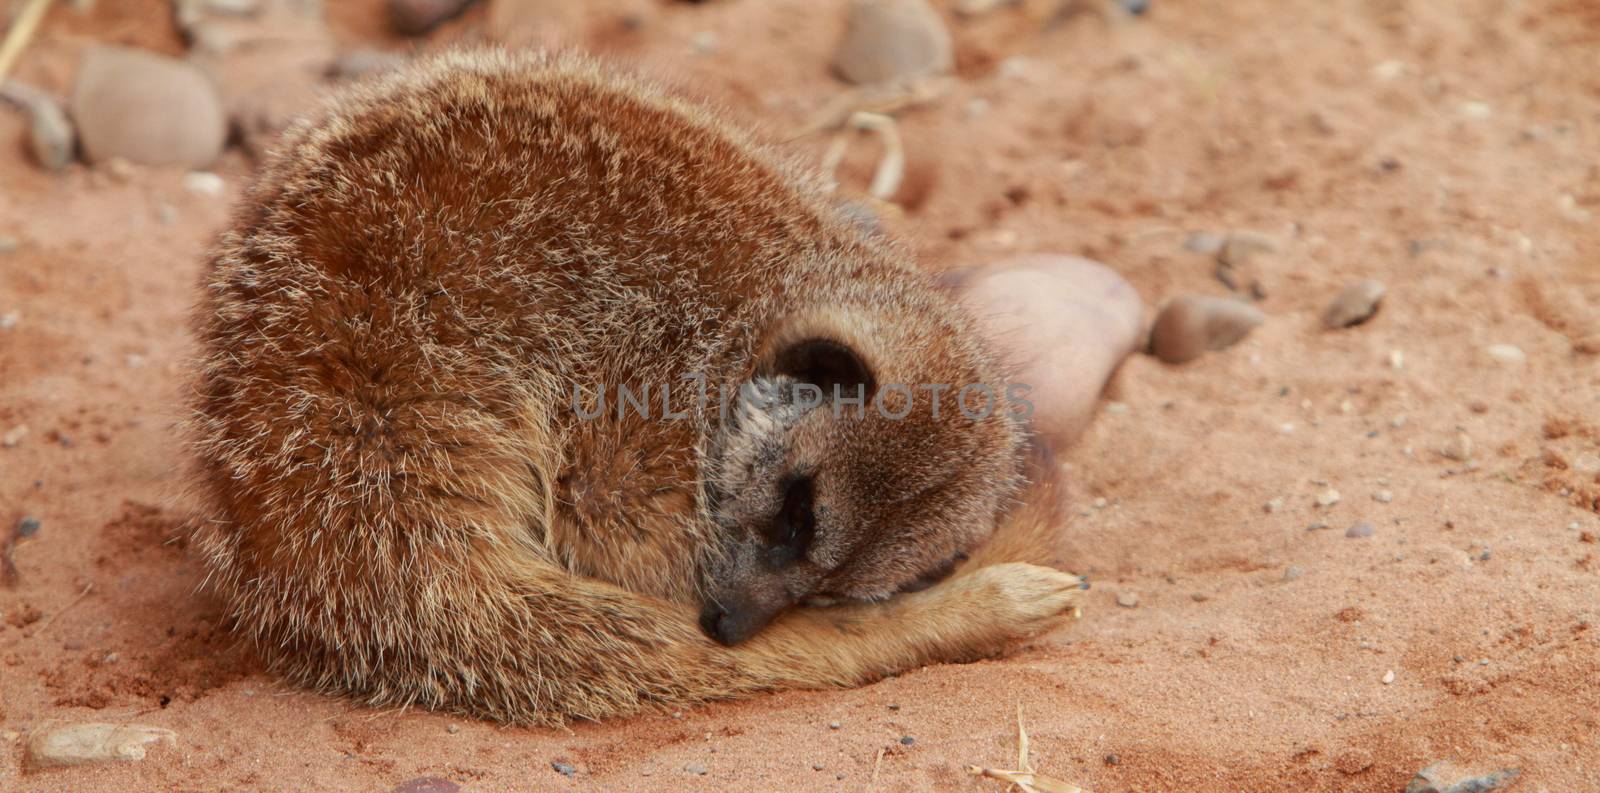 Sleeping meerkat, Suricata suricatta by mitzy